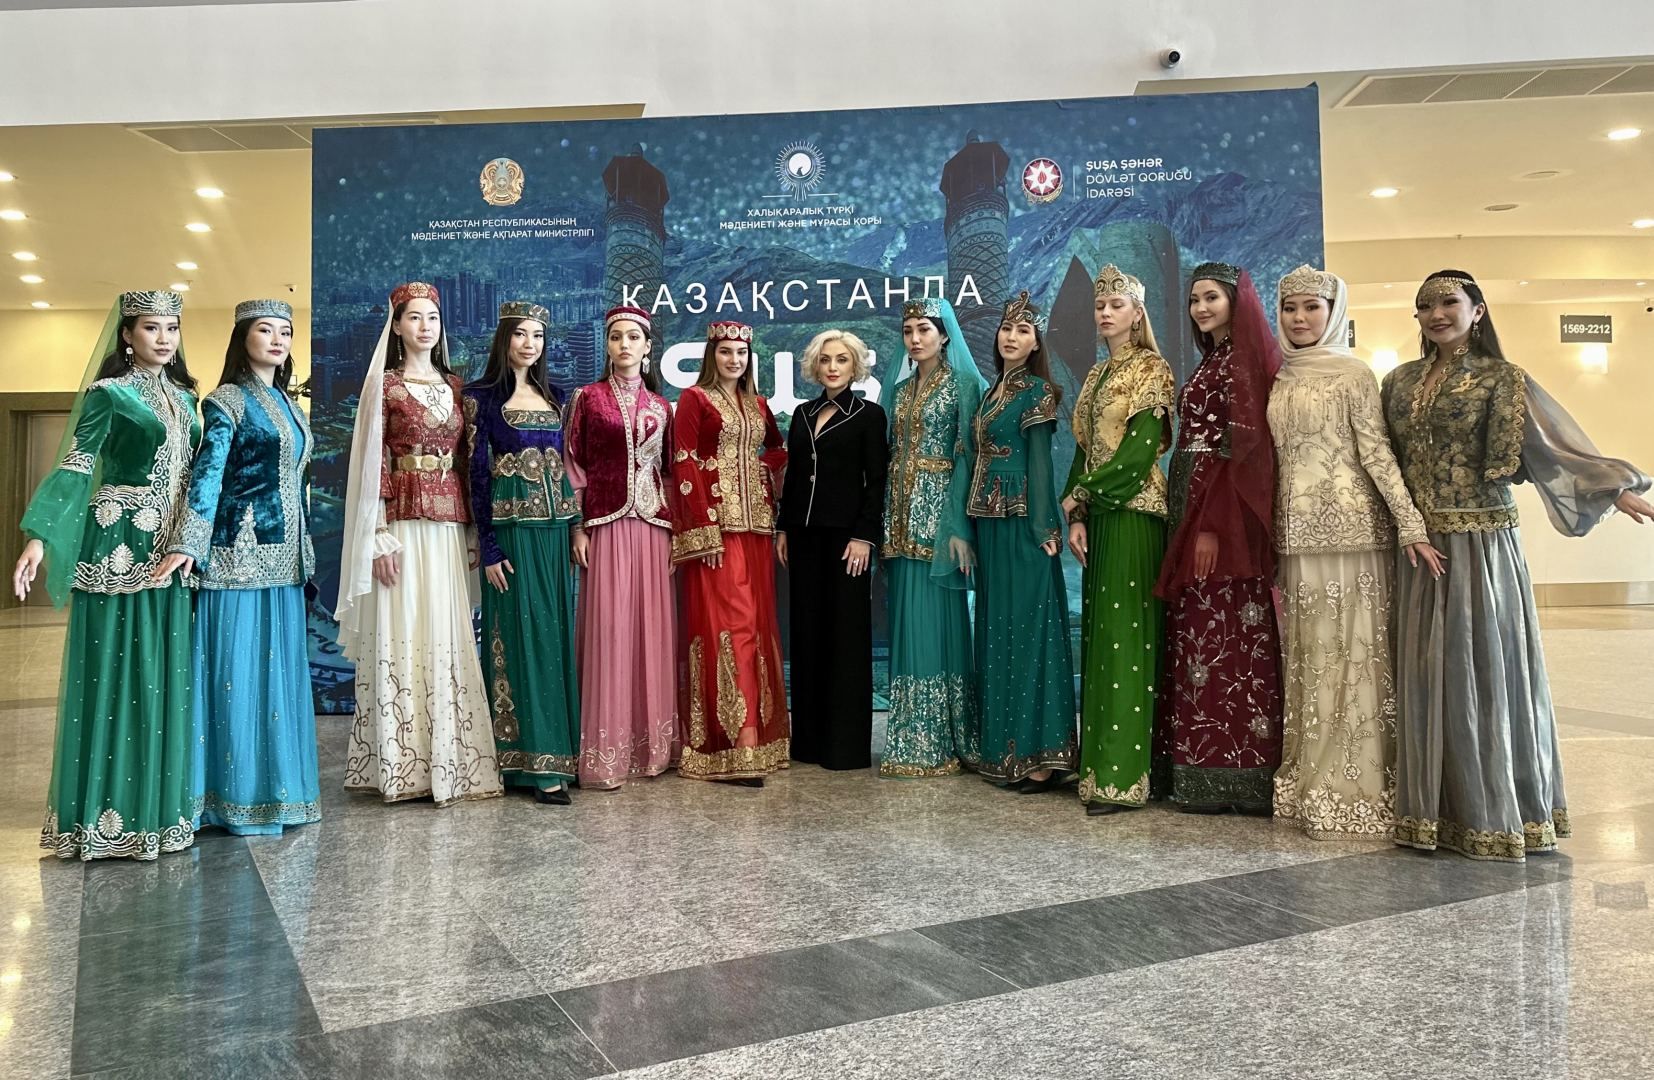 Gulnara Khalilova demonstrates her fashion collection in Kazakhstan [PHOTOS/VIDEO] - Gallery Image